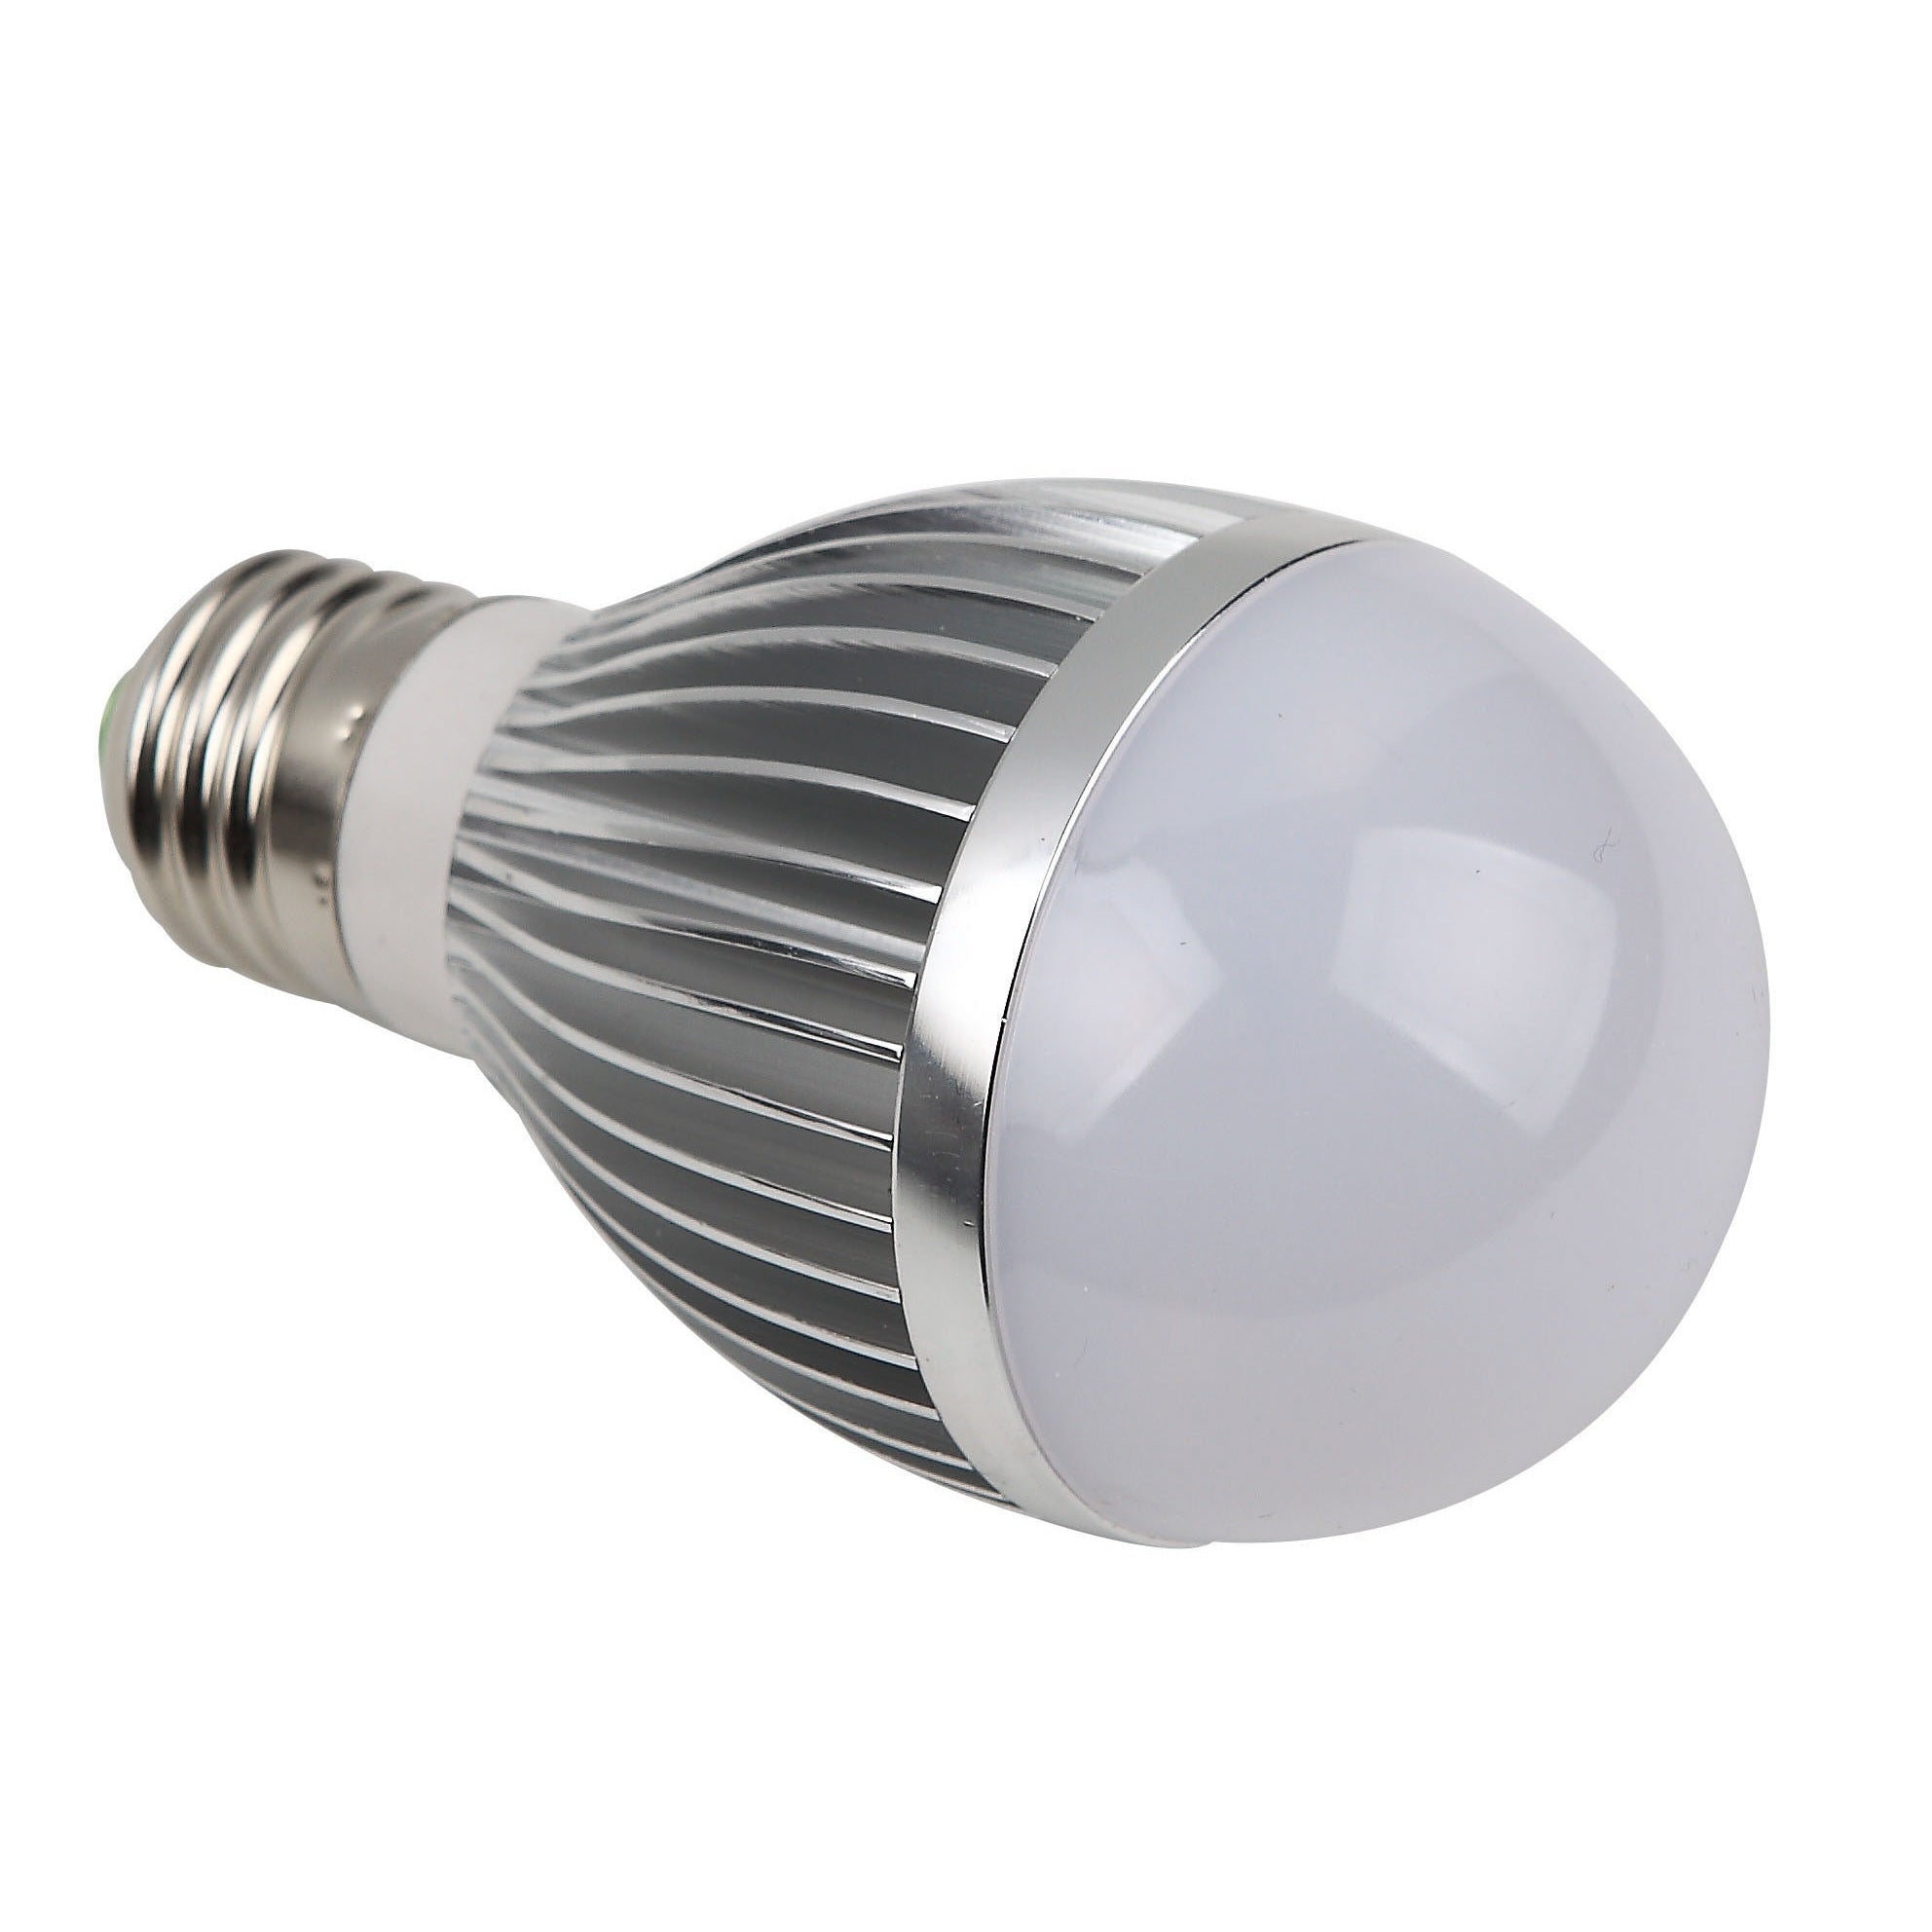 24V LED Bulbs